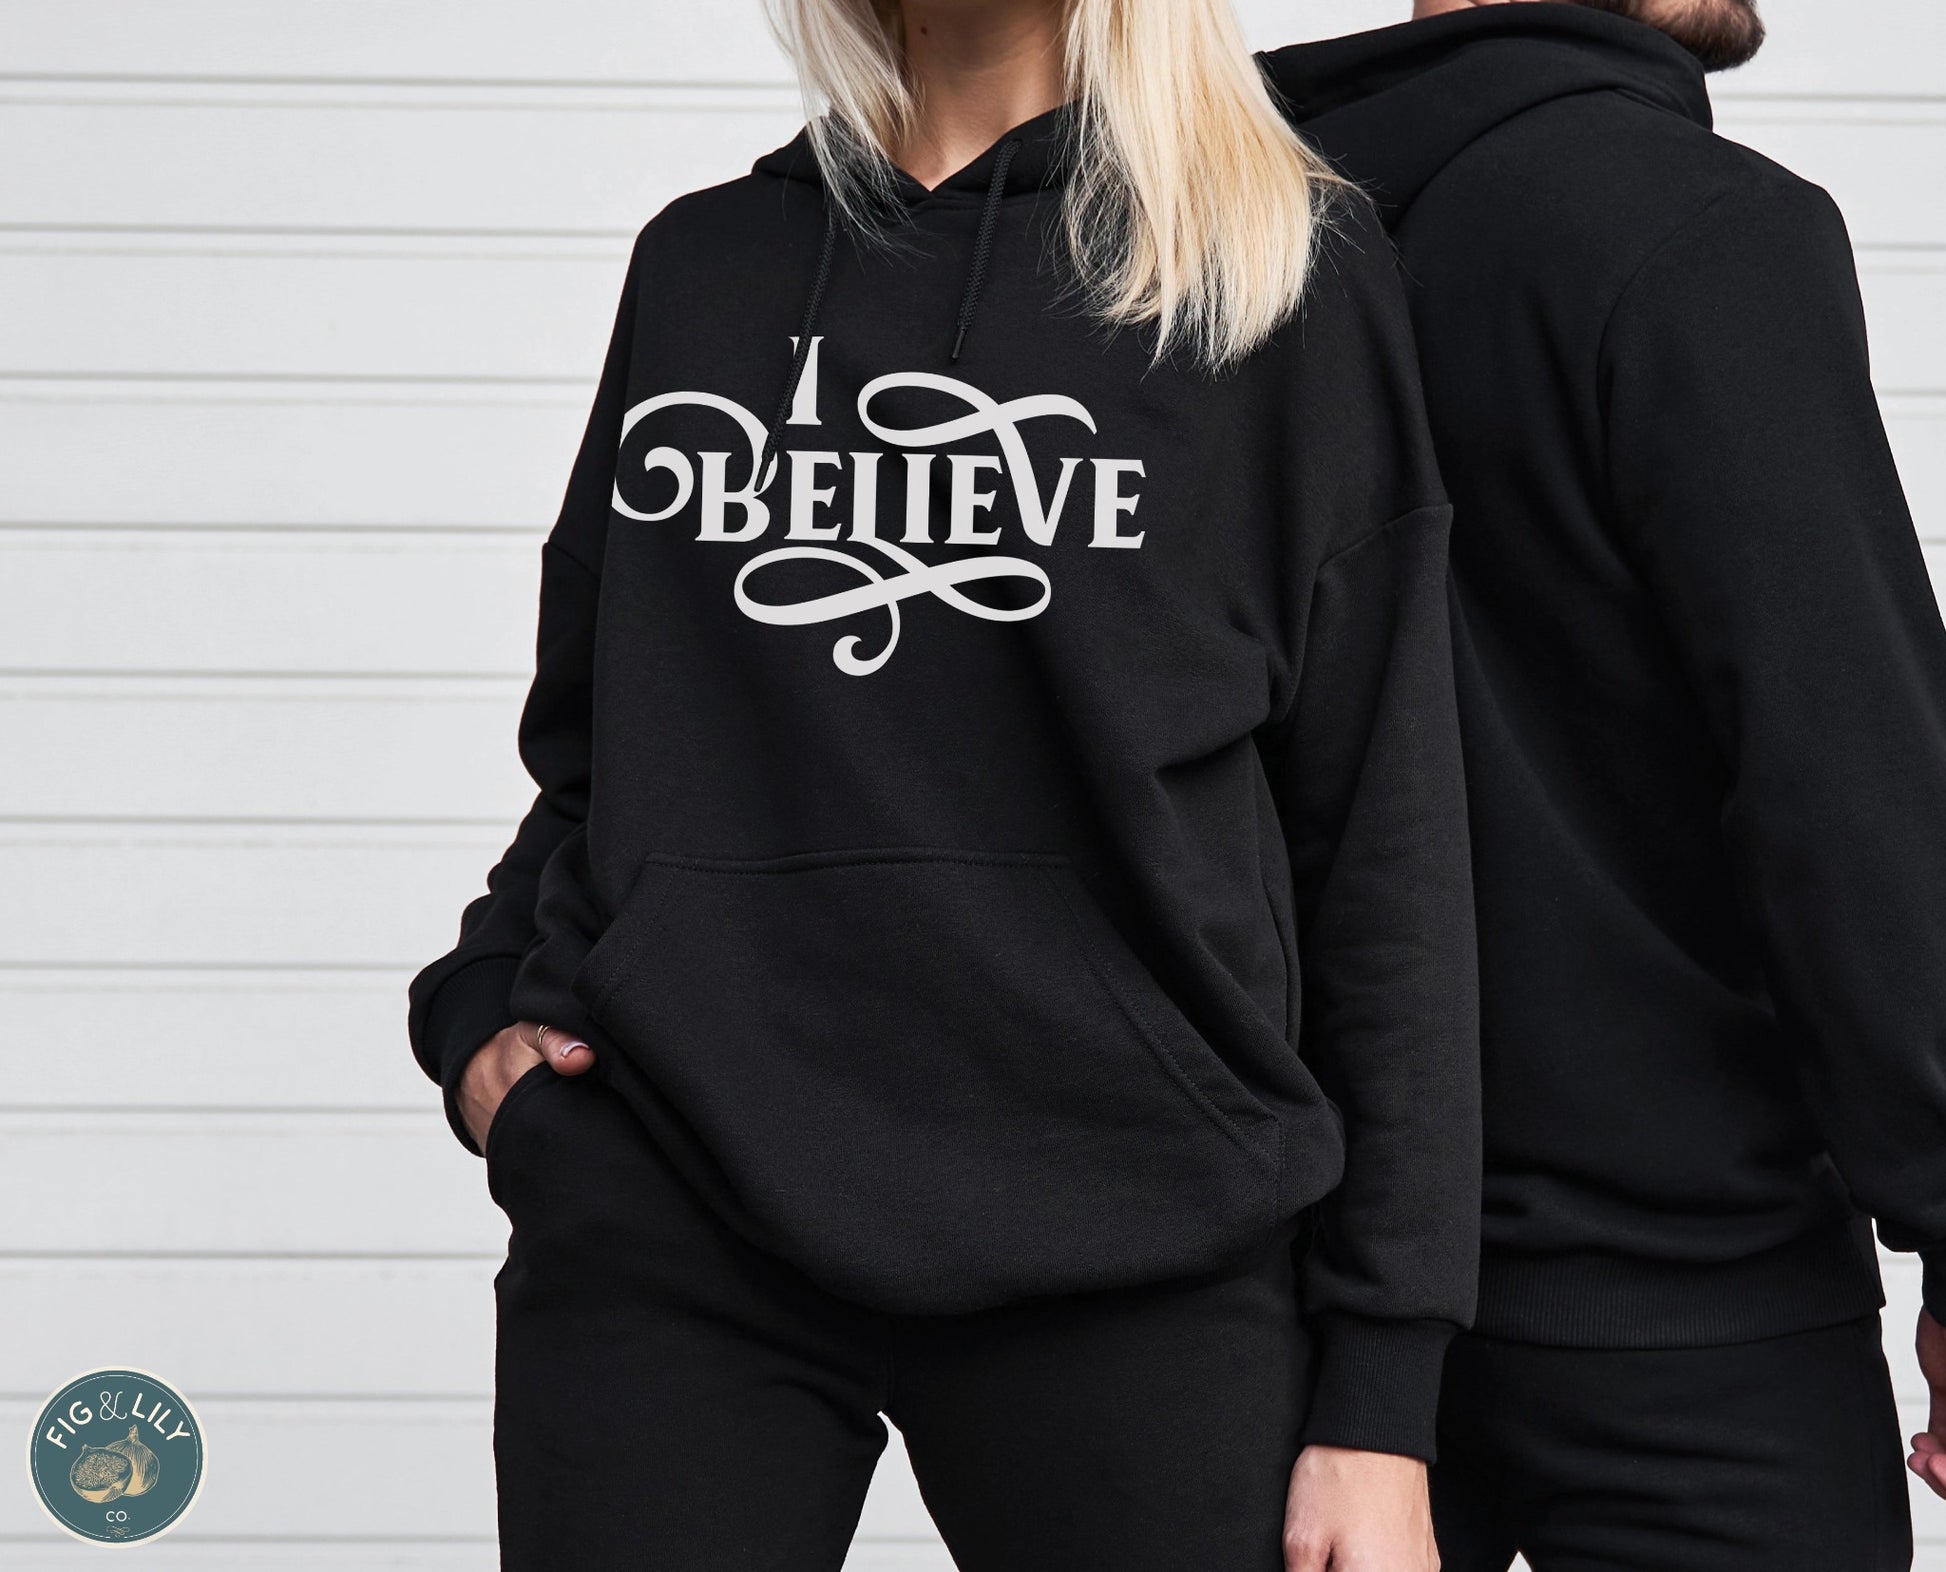 I Believe Swirl Christian aesthetic Jesus believer design printed in white on soft black unisex hoodie sweatshirt for women, great gift for her